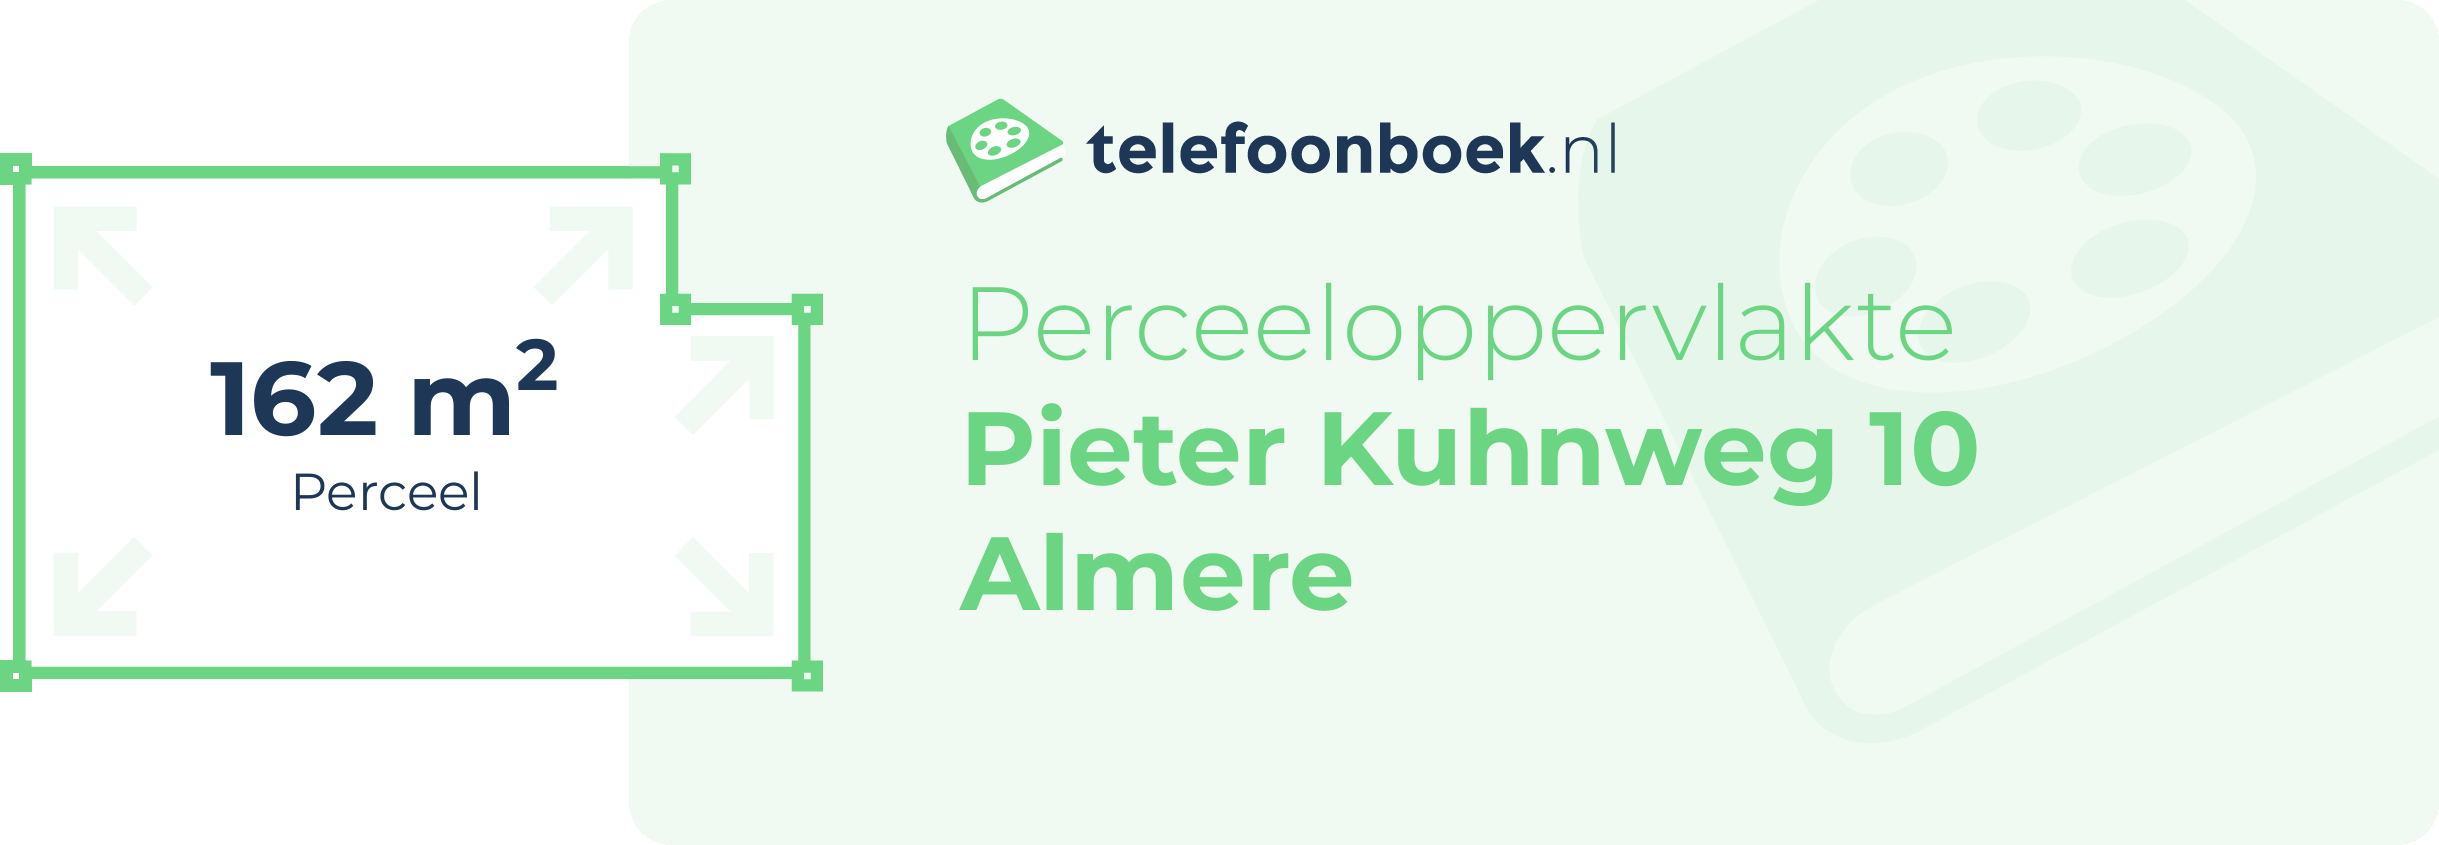 Perceeloppervlakte Pieter Kuhnweg 10 Almere